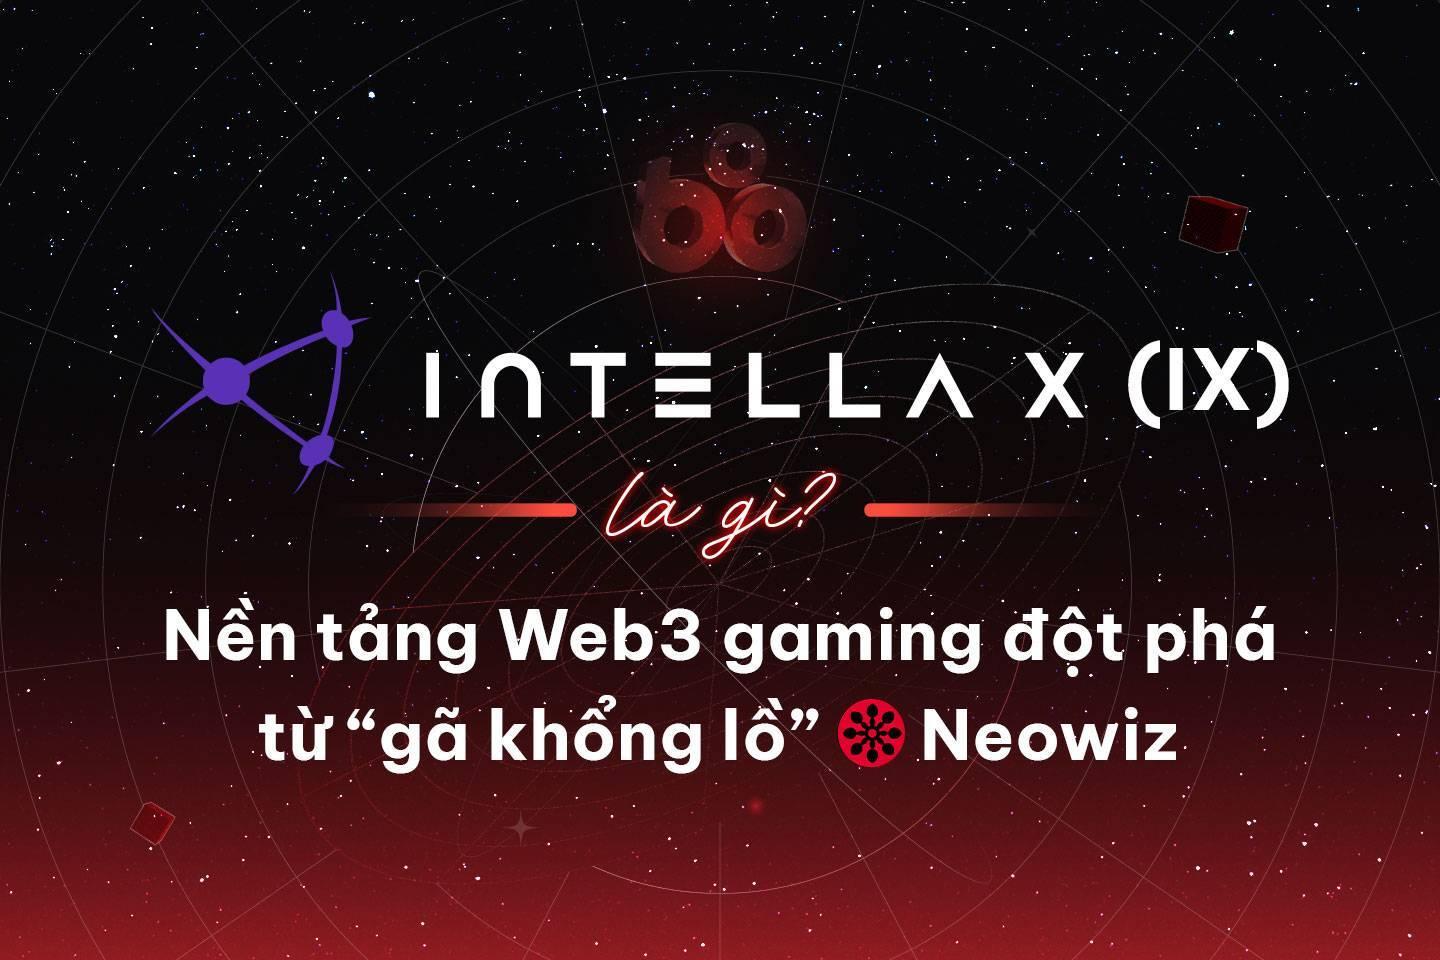 intella-x-ix-la-gi-nen-tang-web3-gaming-dot-pha-tu-ga-khong-lo-neowiz